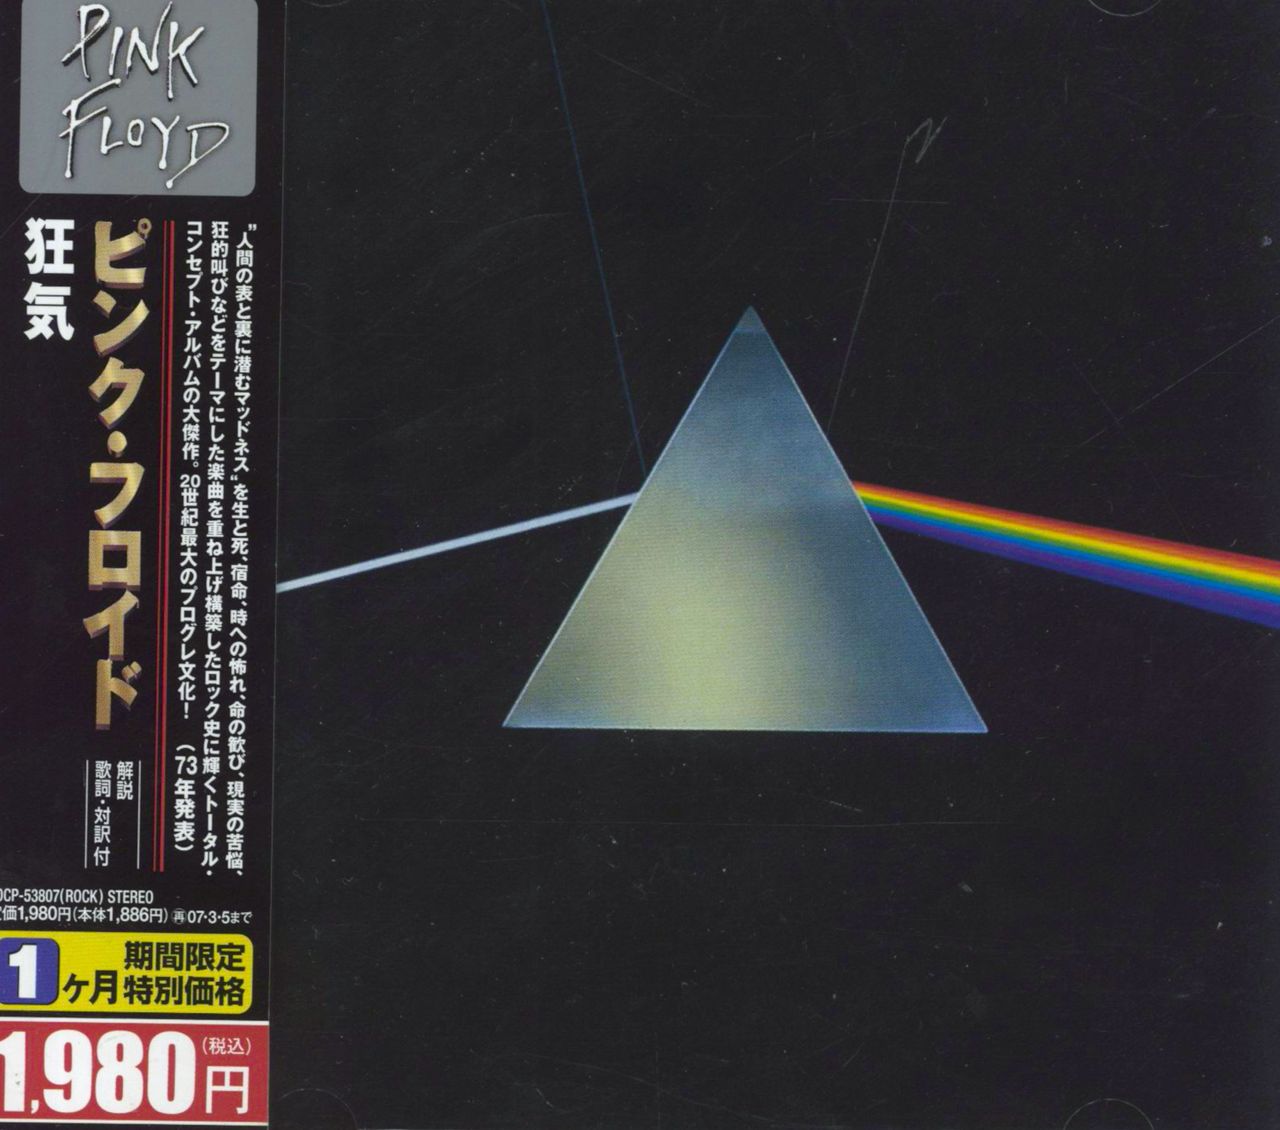 Pink Floyd The Dark Side Of The Moon Japanese CD album — RareVinyl.com